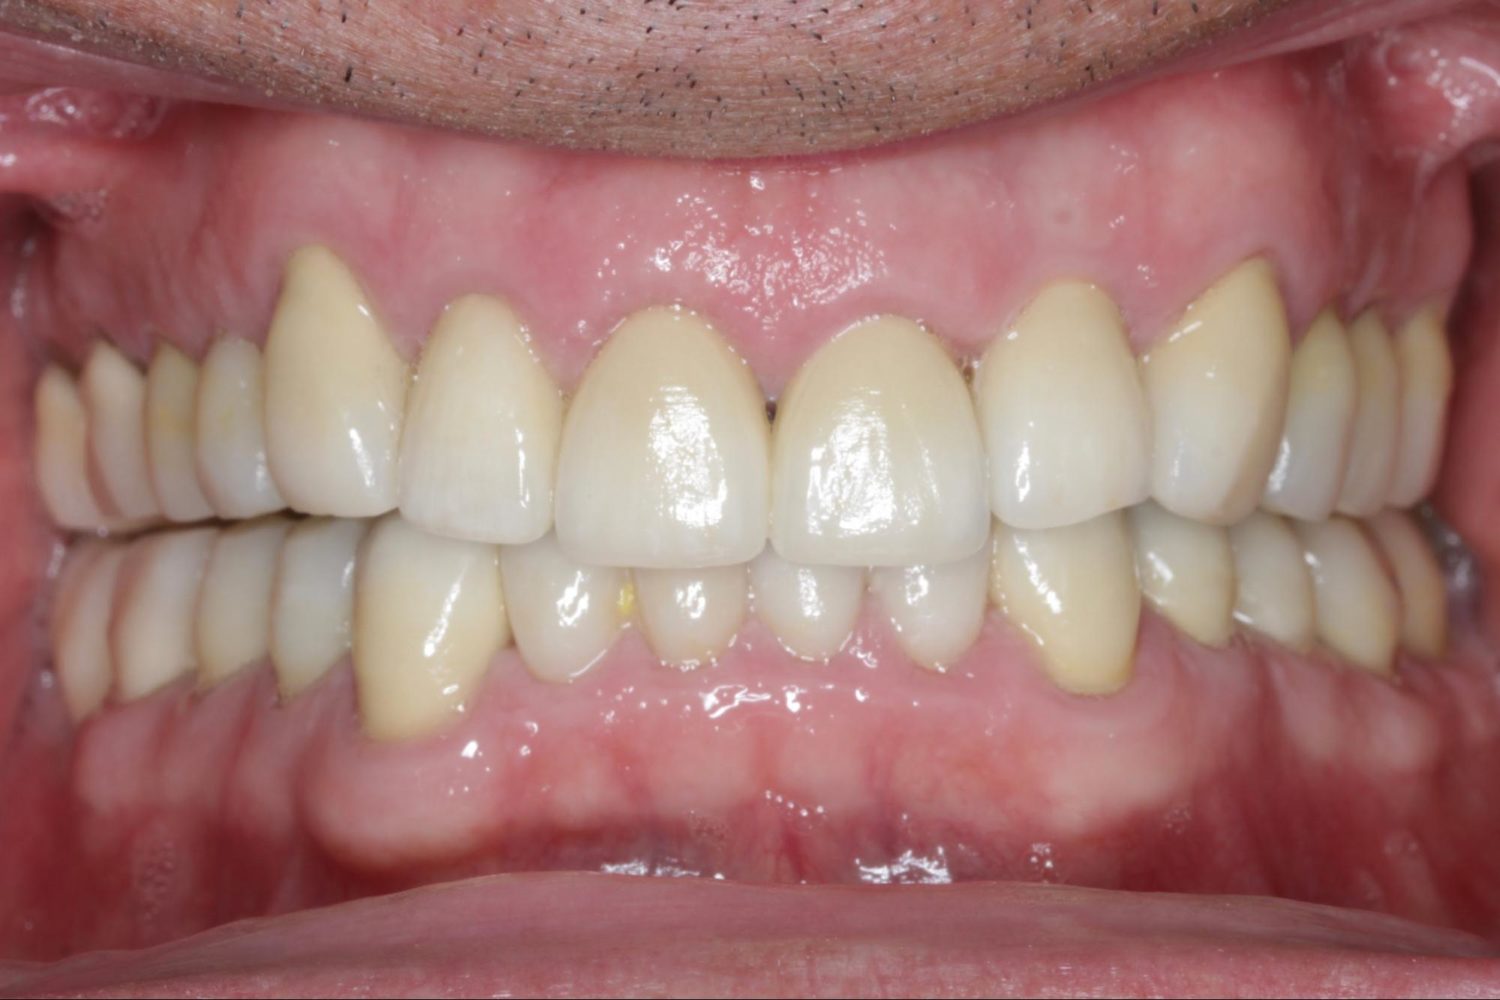 After Major Restorative Dental Treatment